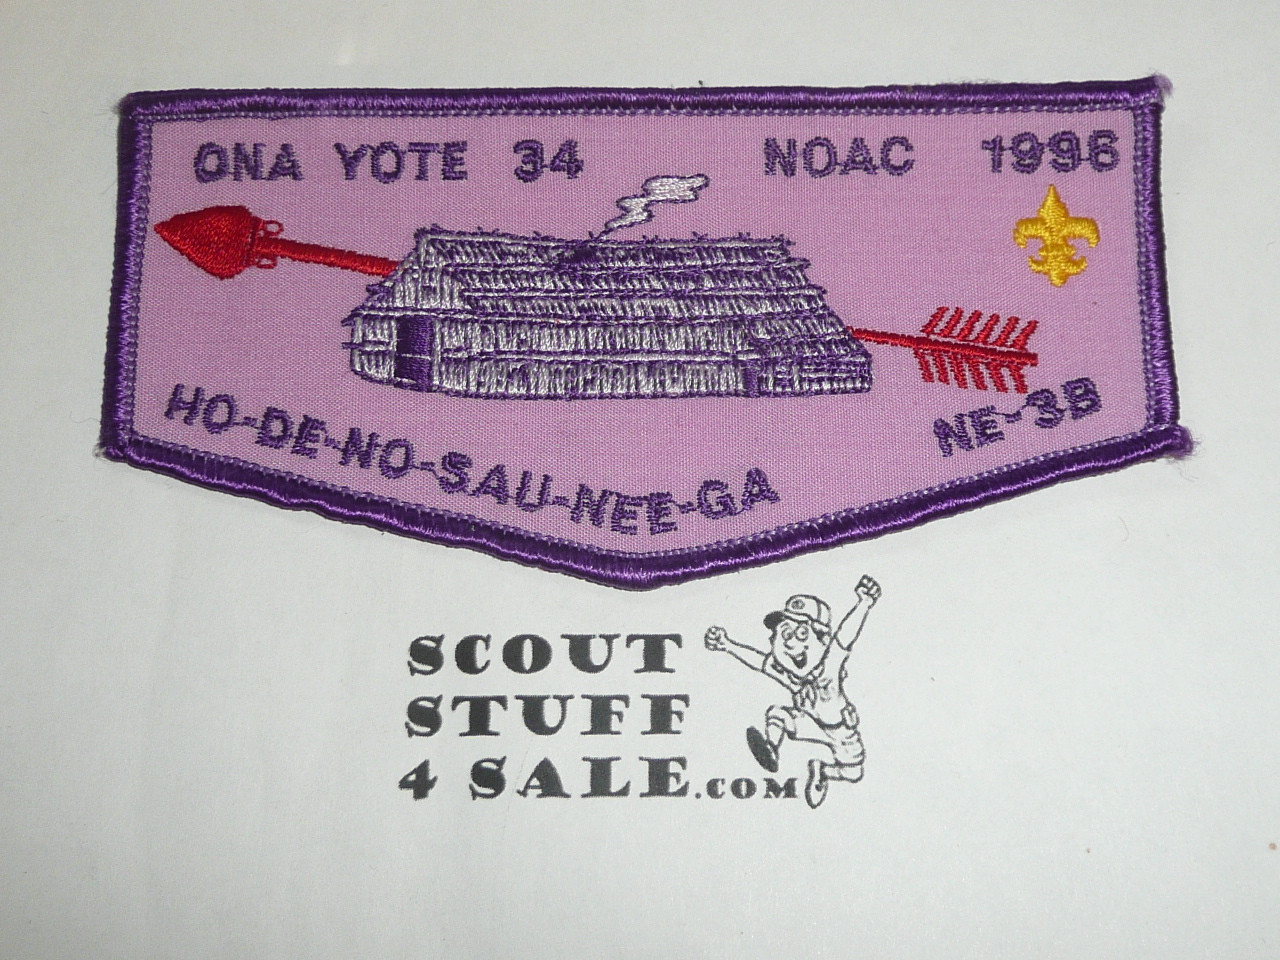 Order of the Arrow Lodge #34 Ona Yote 1996 NOAC Flap Patch